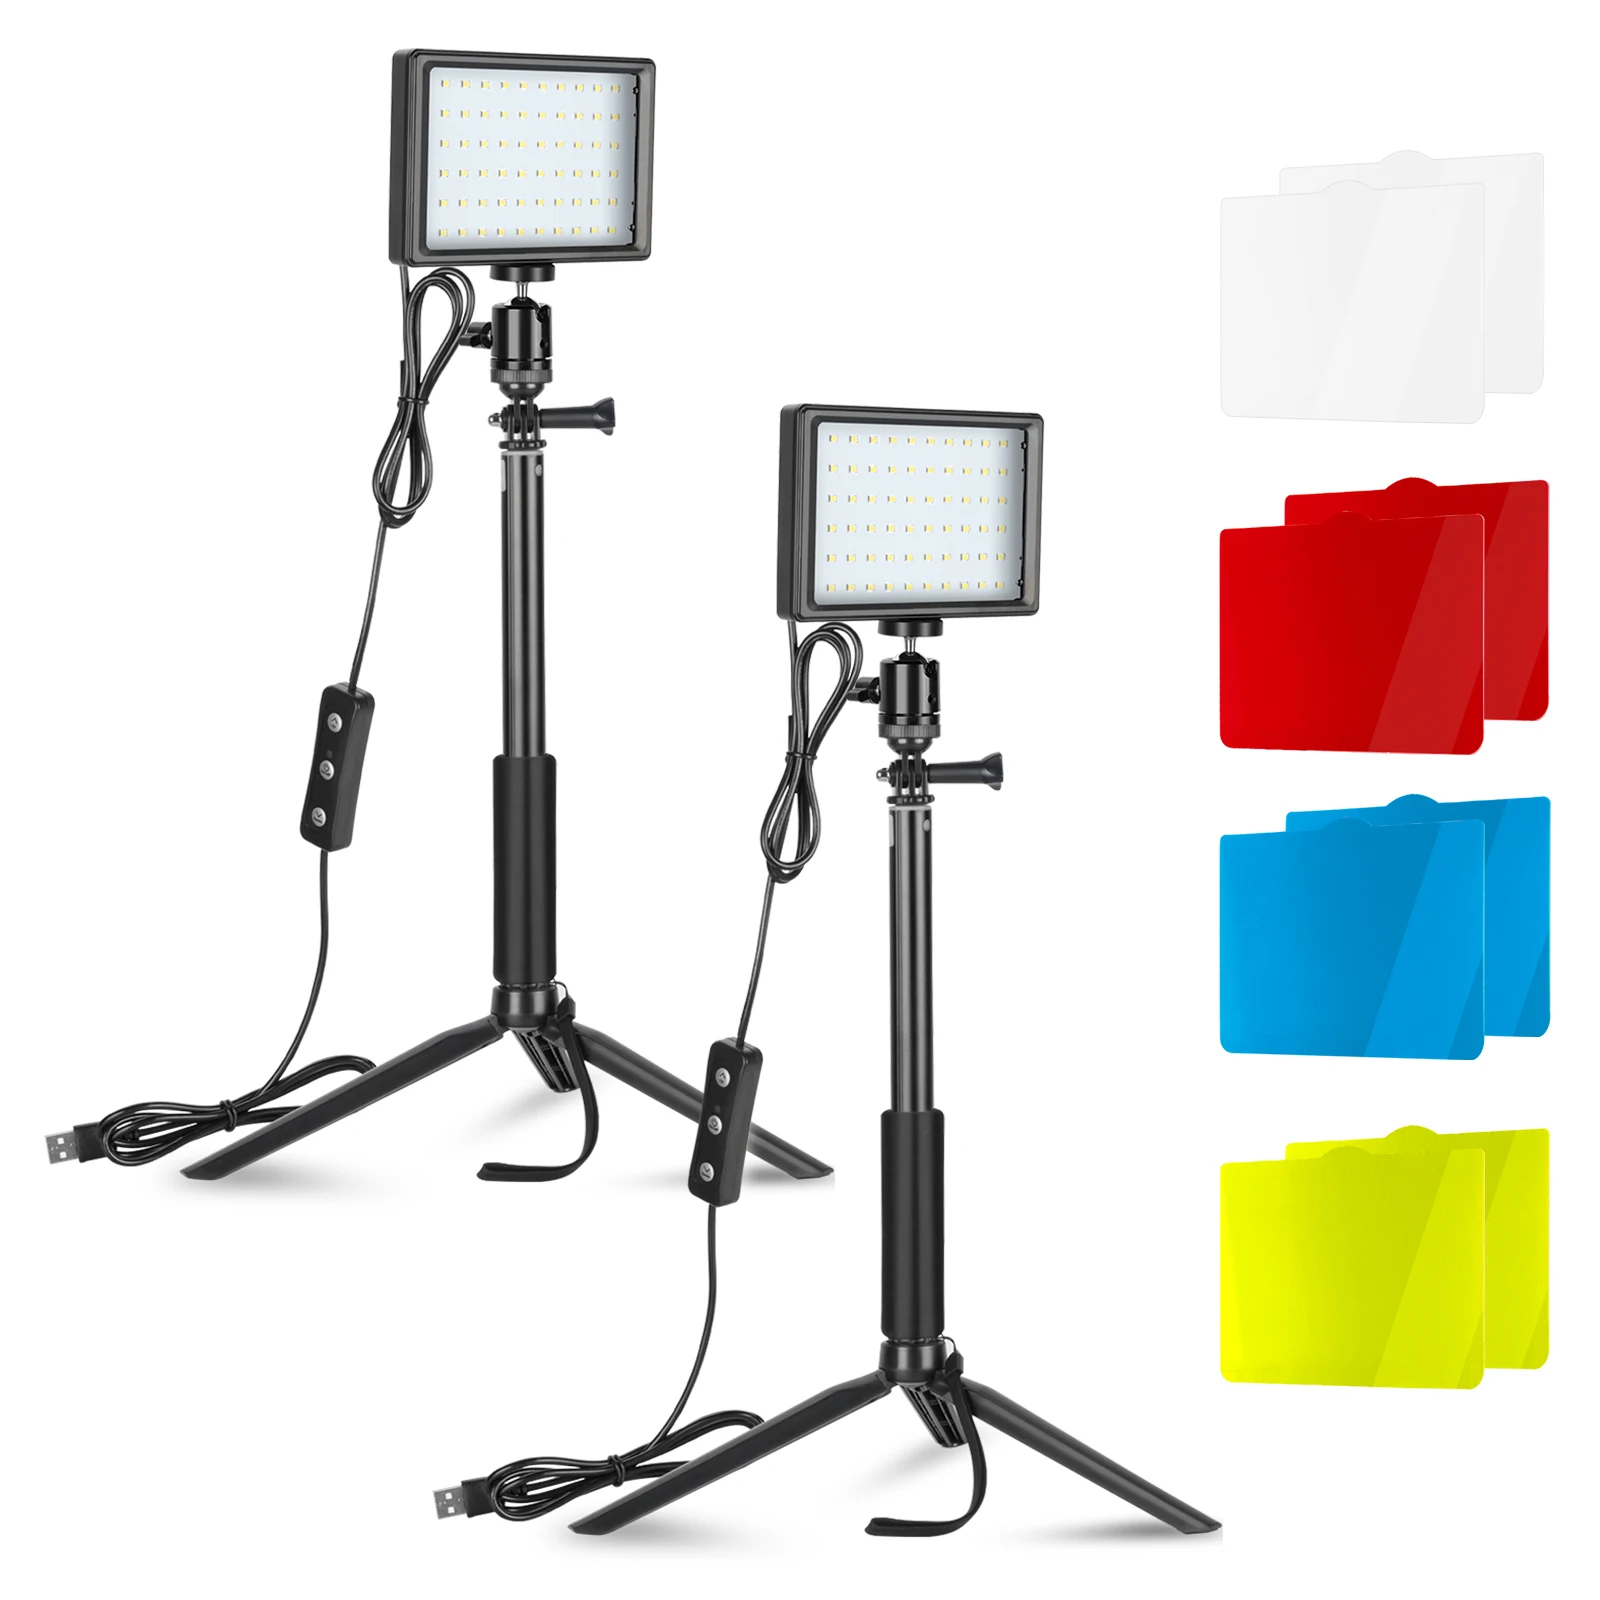 

NEEWER Desktop LED Video Lighting Kit, 2 Packs USB Dimmable 5600K LED Video Light with Telescopic Poles, Mini Tripod Stands